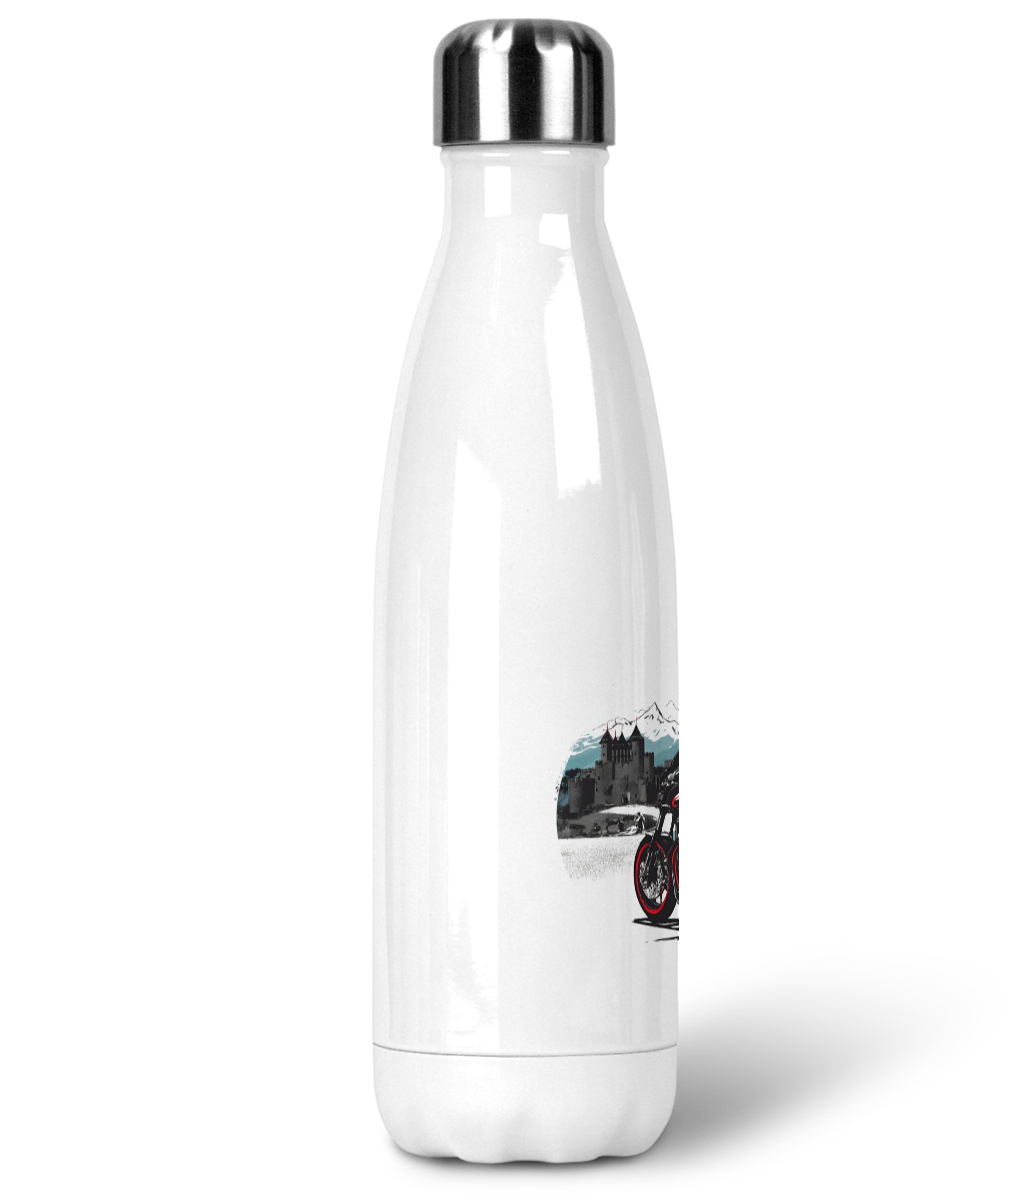 She Rides - Water Bottle "Summit 2024"